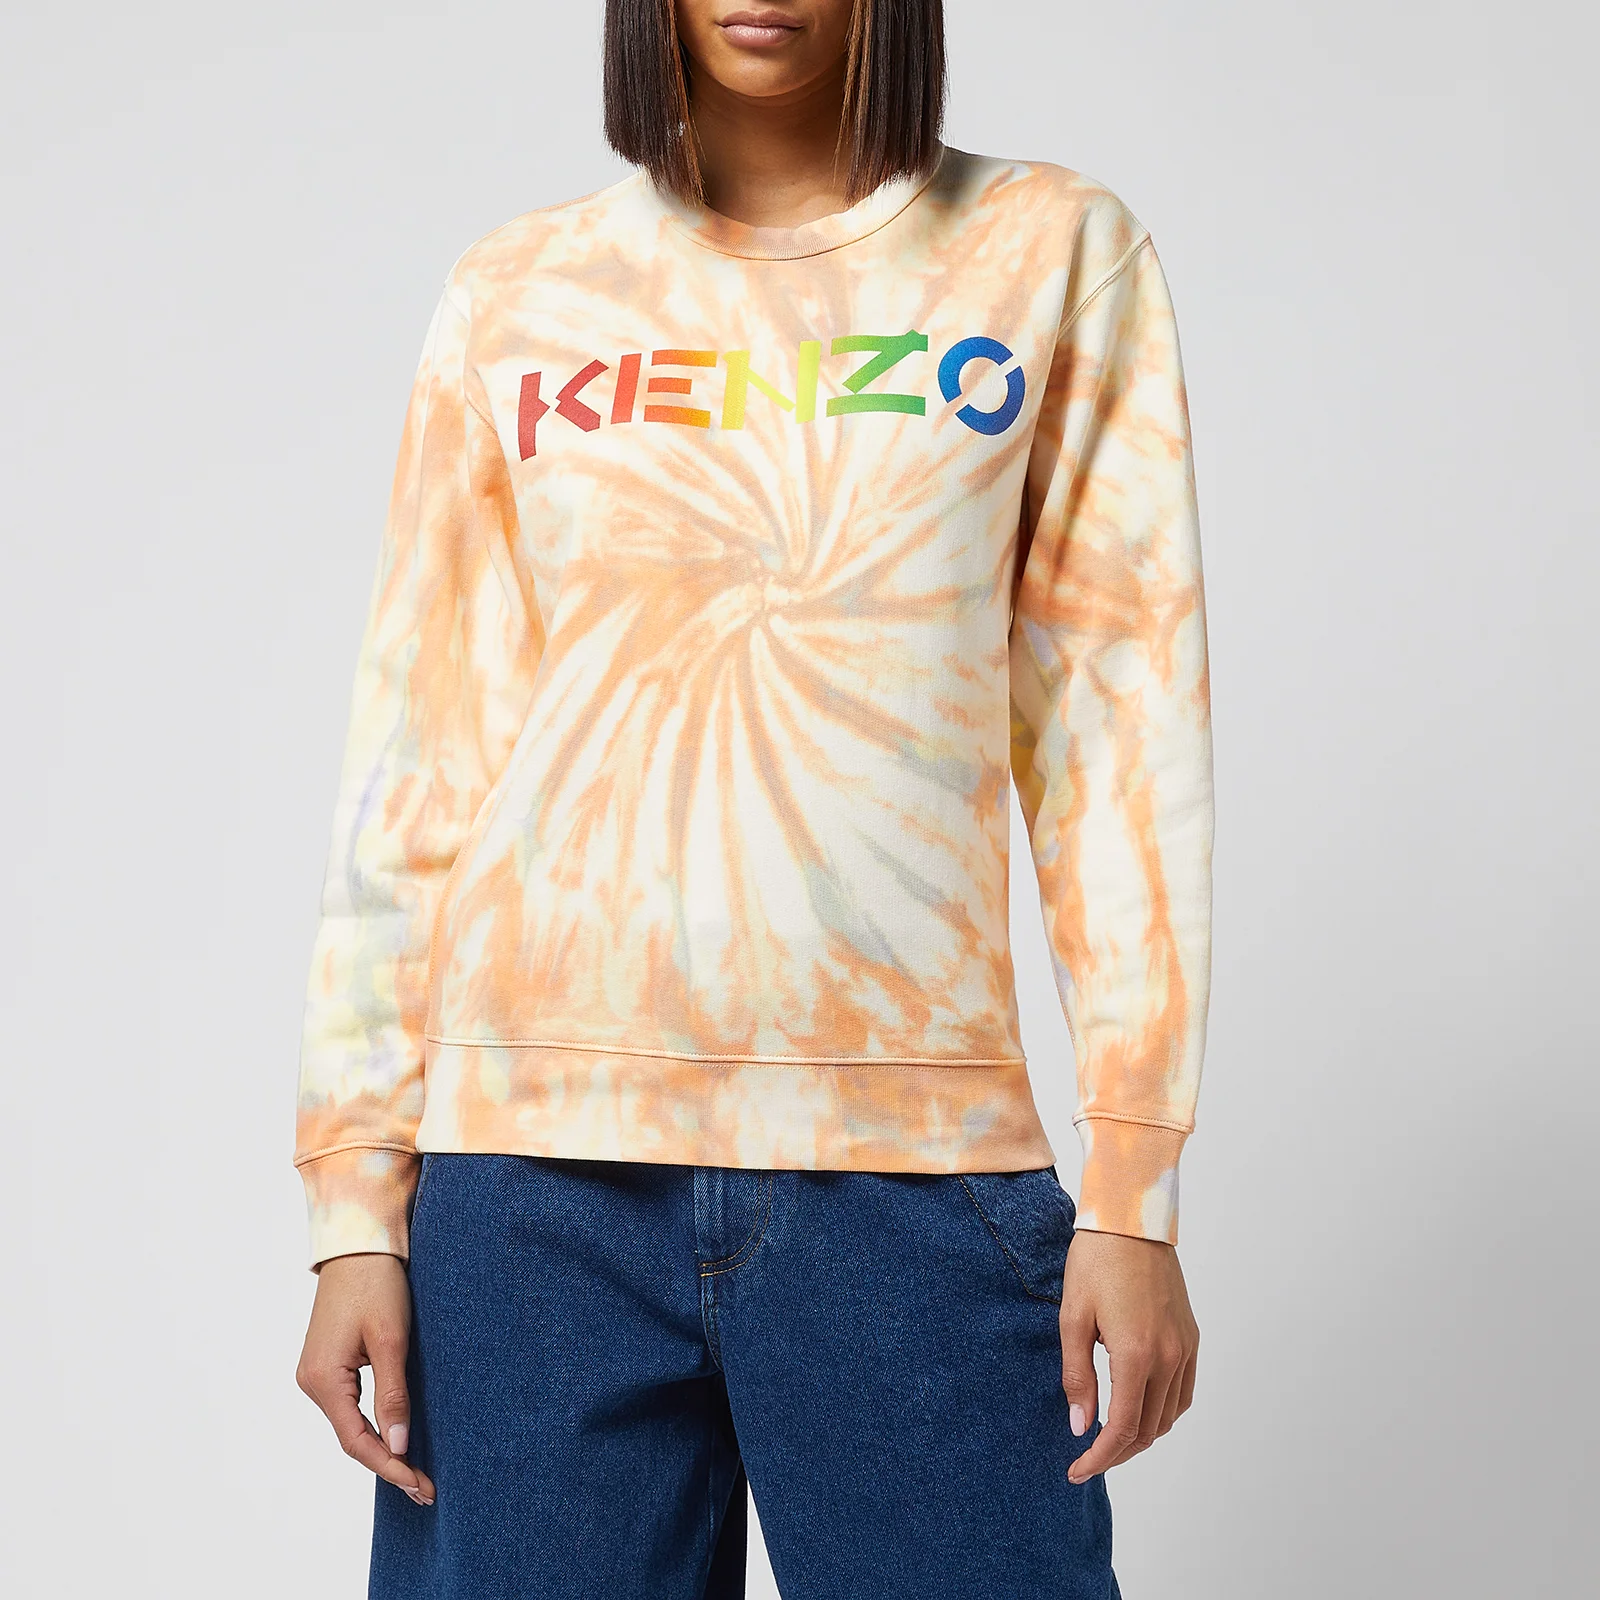 KENZO Women's Kenzo Logo Classic Sweatshirt - Peach Image 1